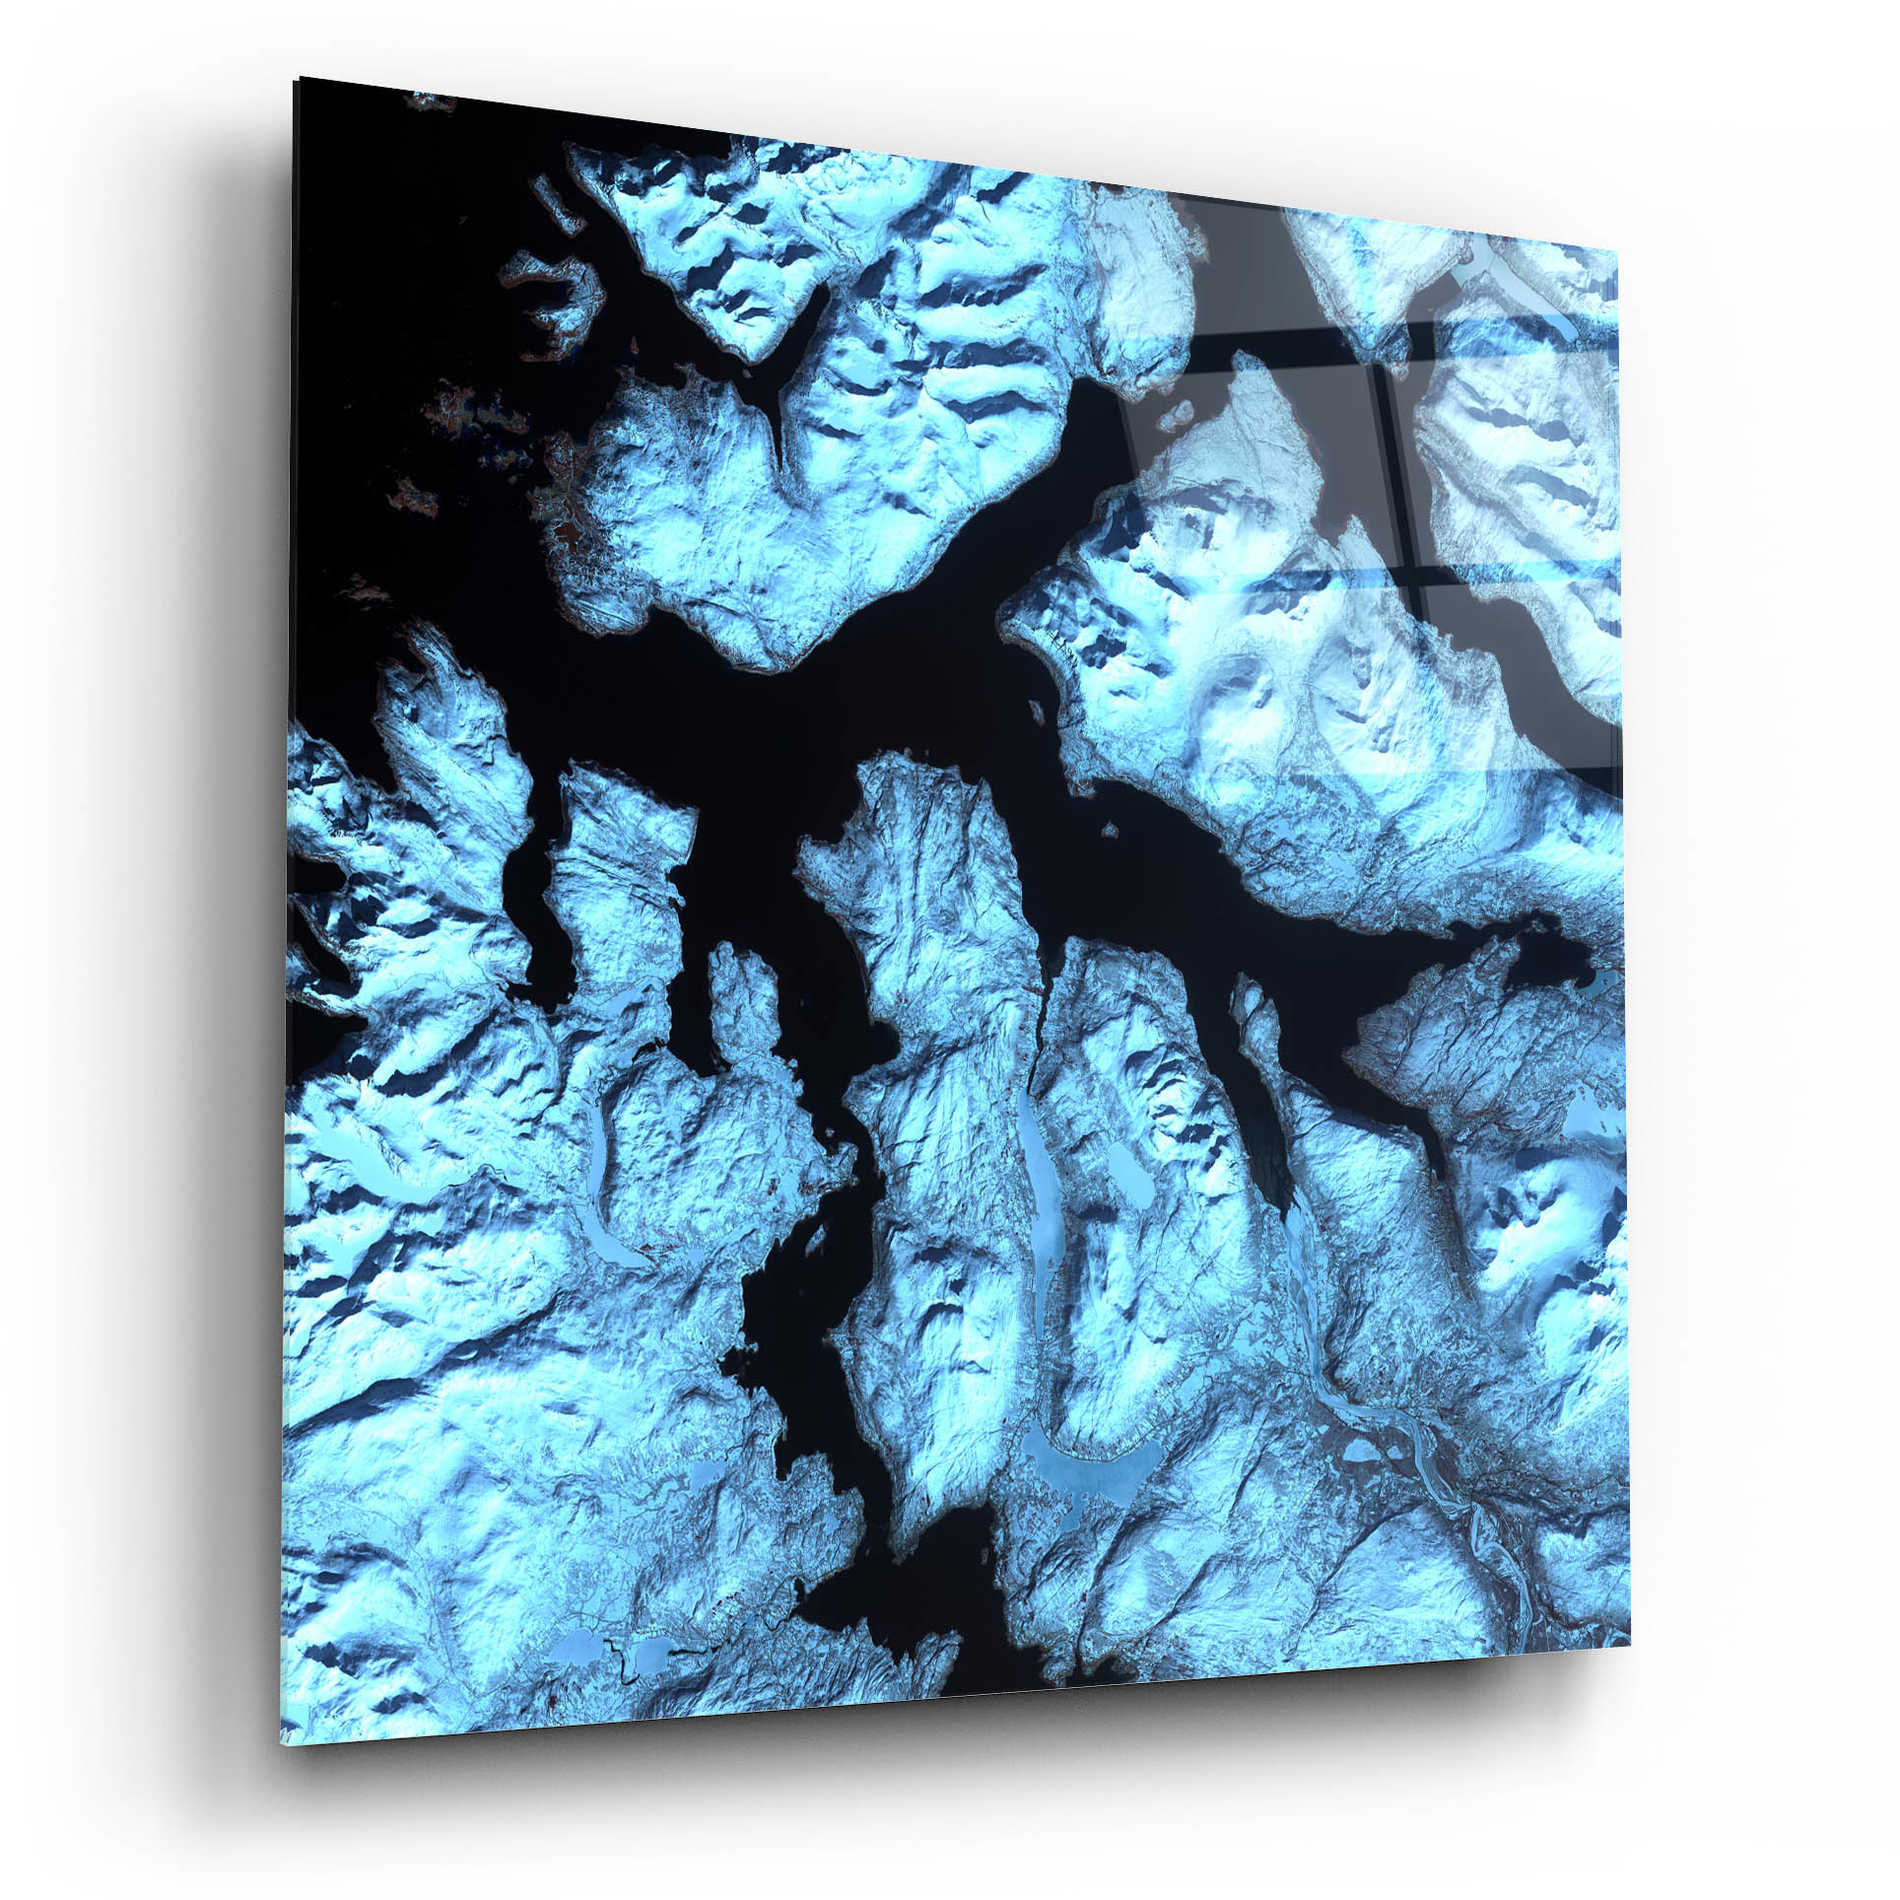 Epic Art 'Earth as Art: Northern Norway' Acrylic Glass Wall Art,12x12